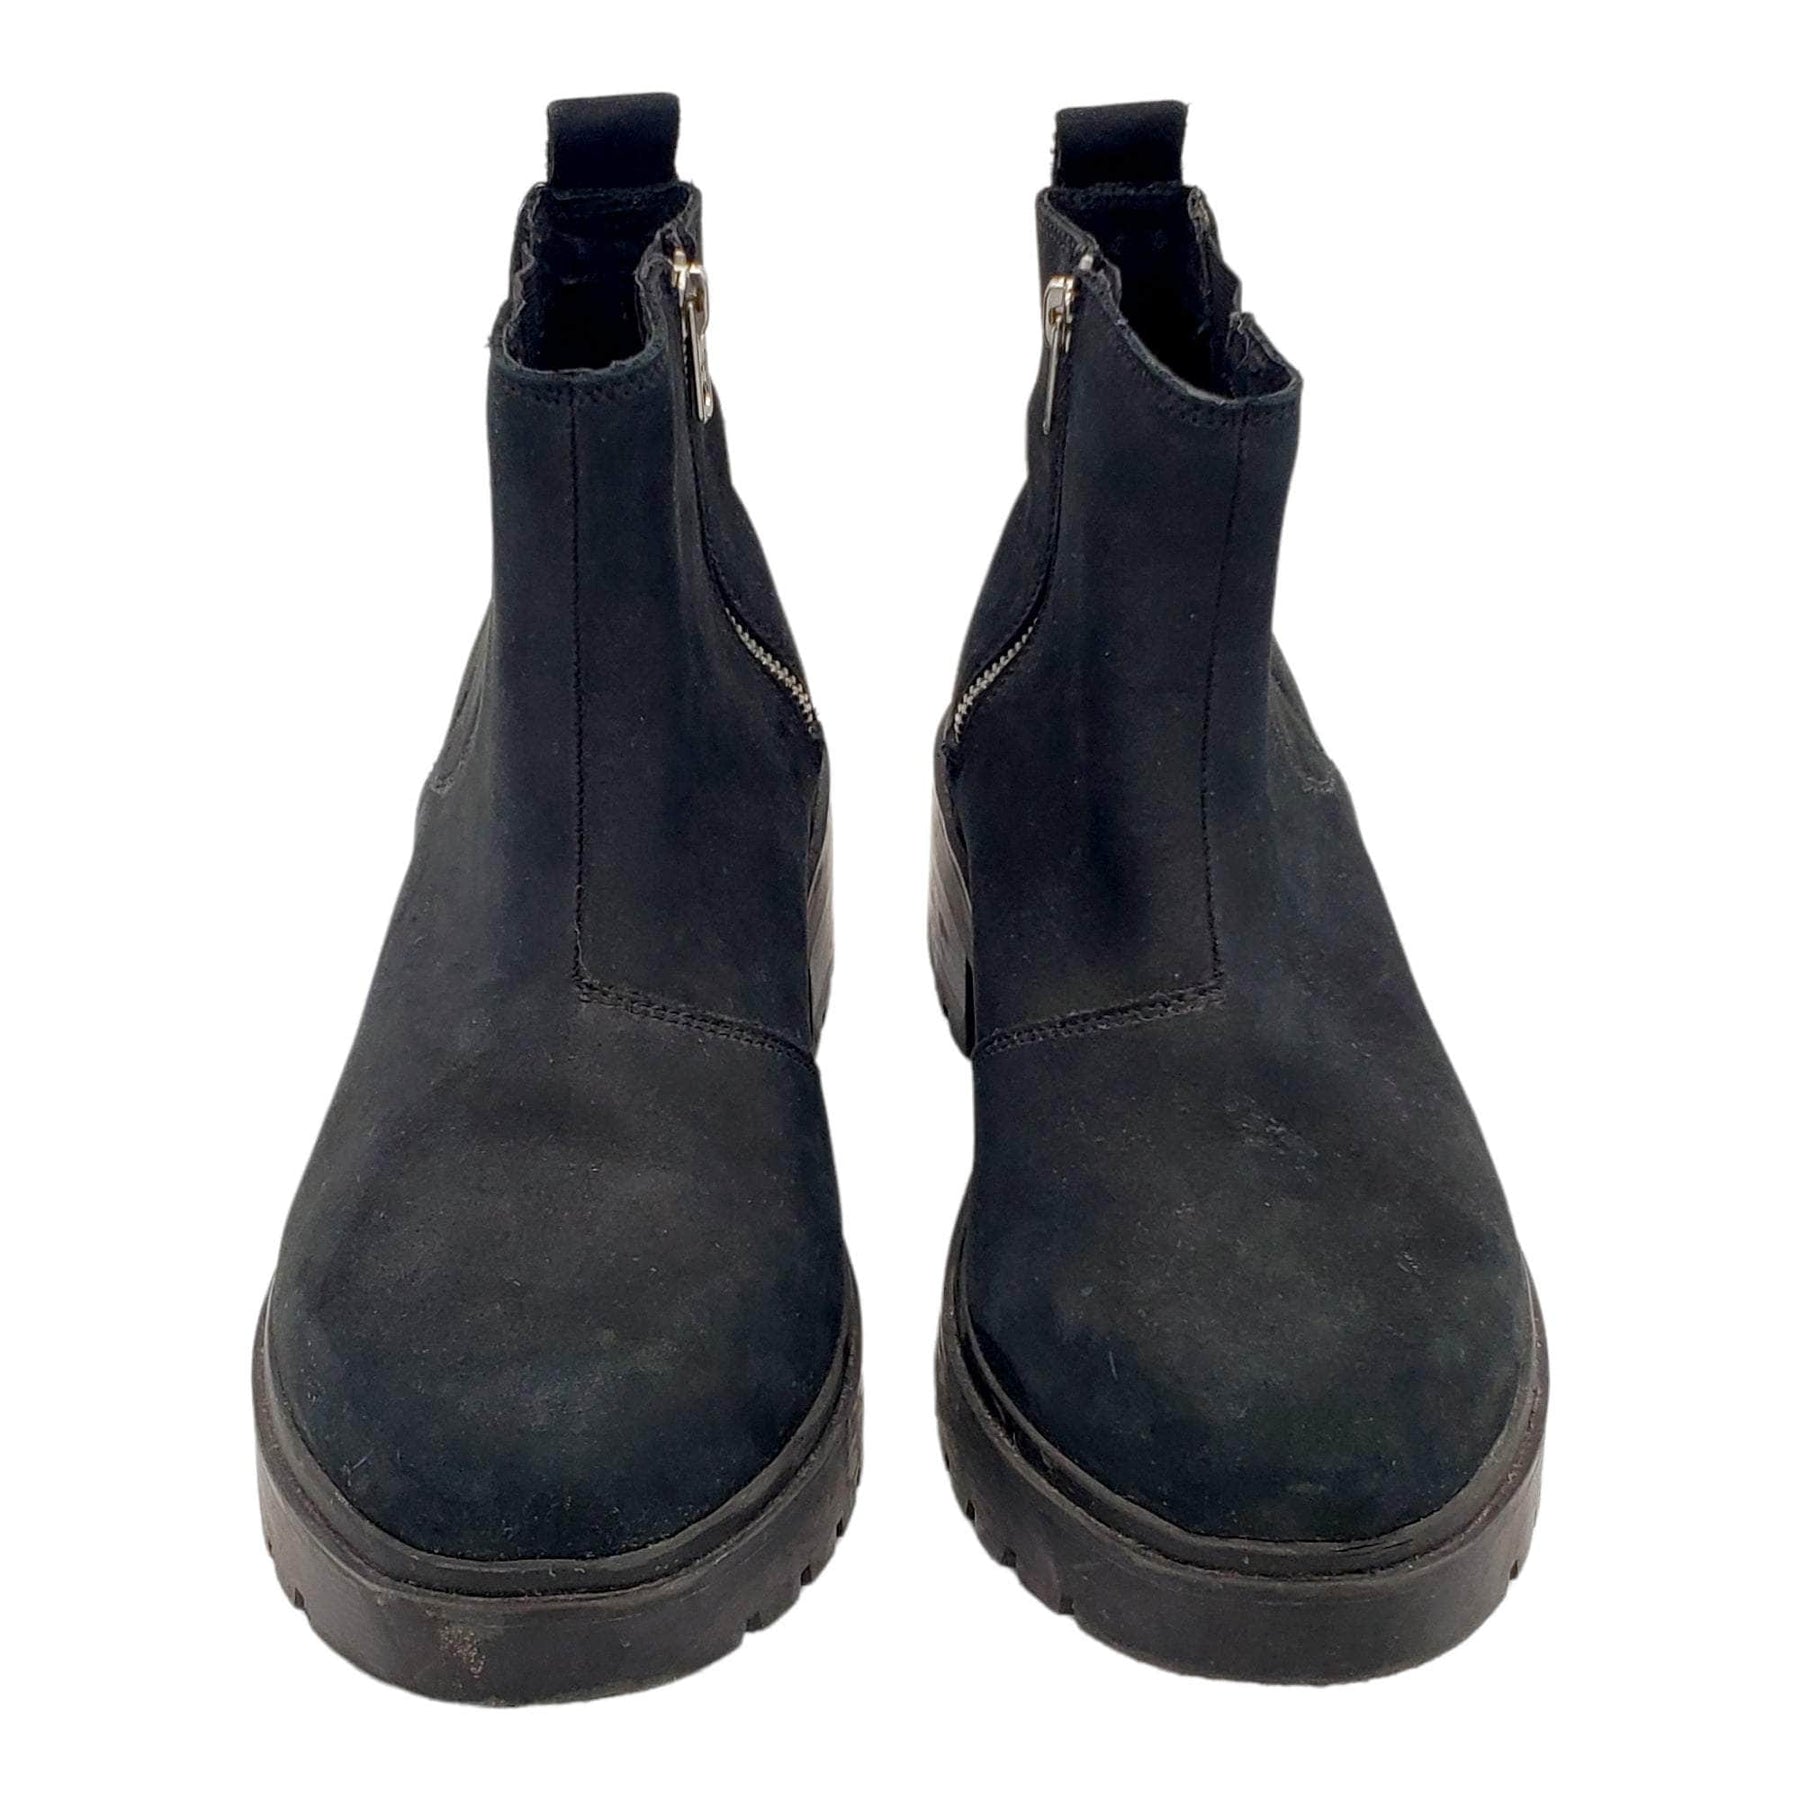 Kickers Black Nubuck Leather Chelsea Boots